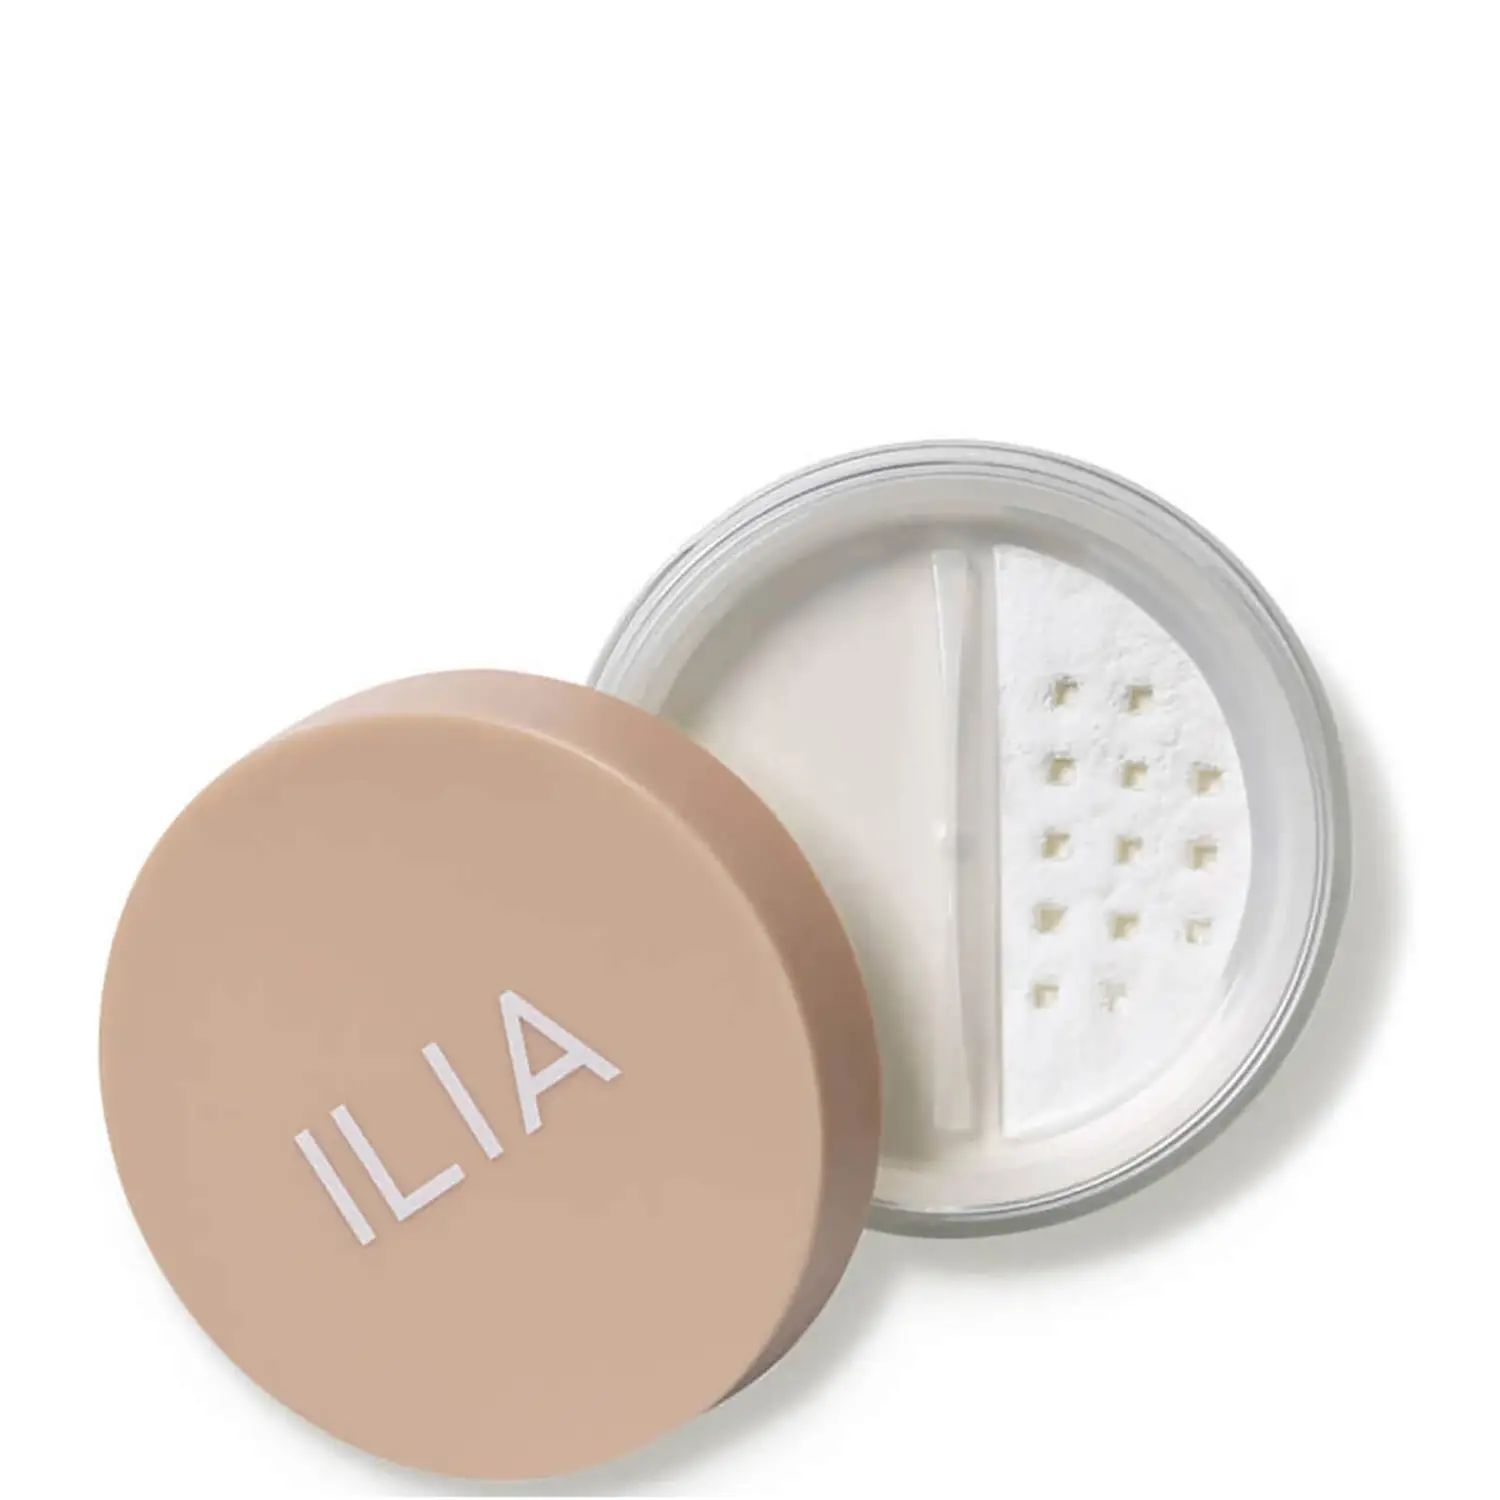 ILIA Soft Focus Finishing Powder - Fade Into You (0.32 oz.) | Dermstore